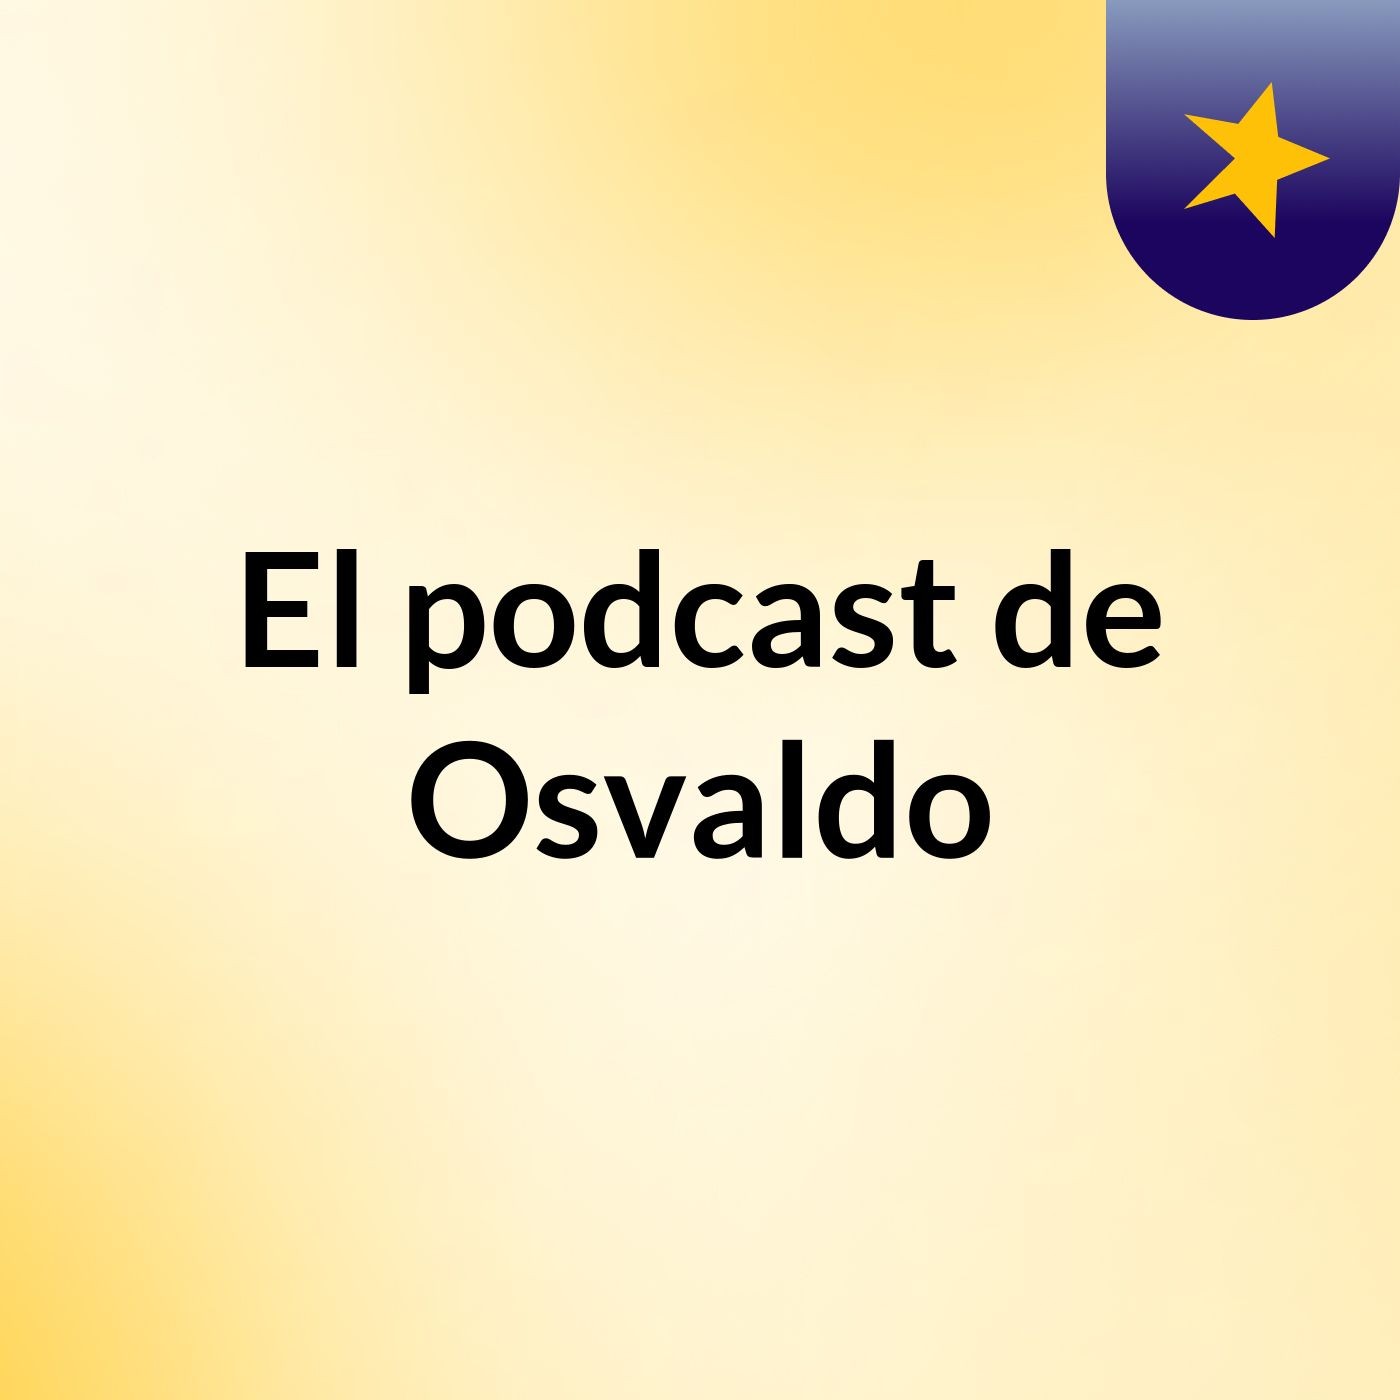 El podcast de Osvaldo